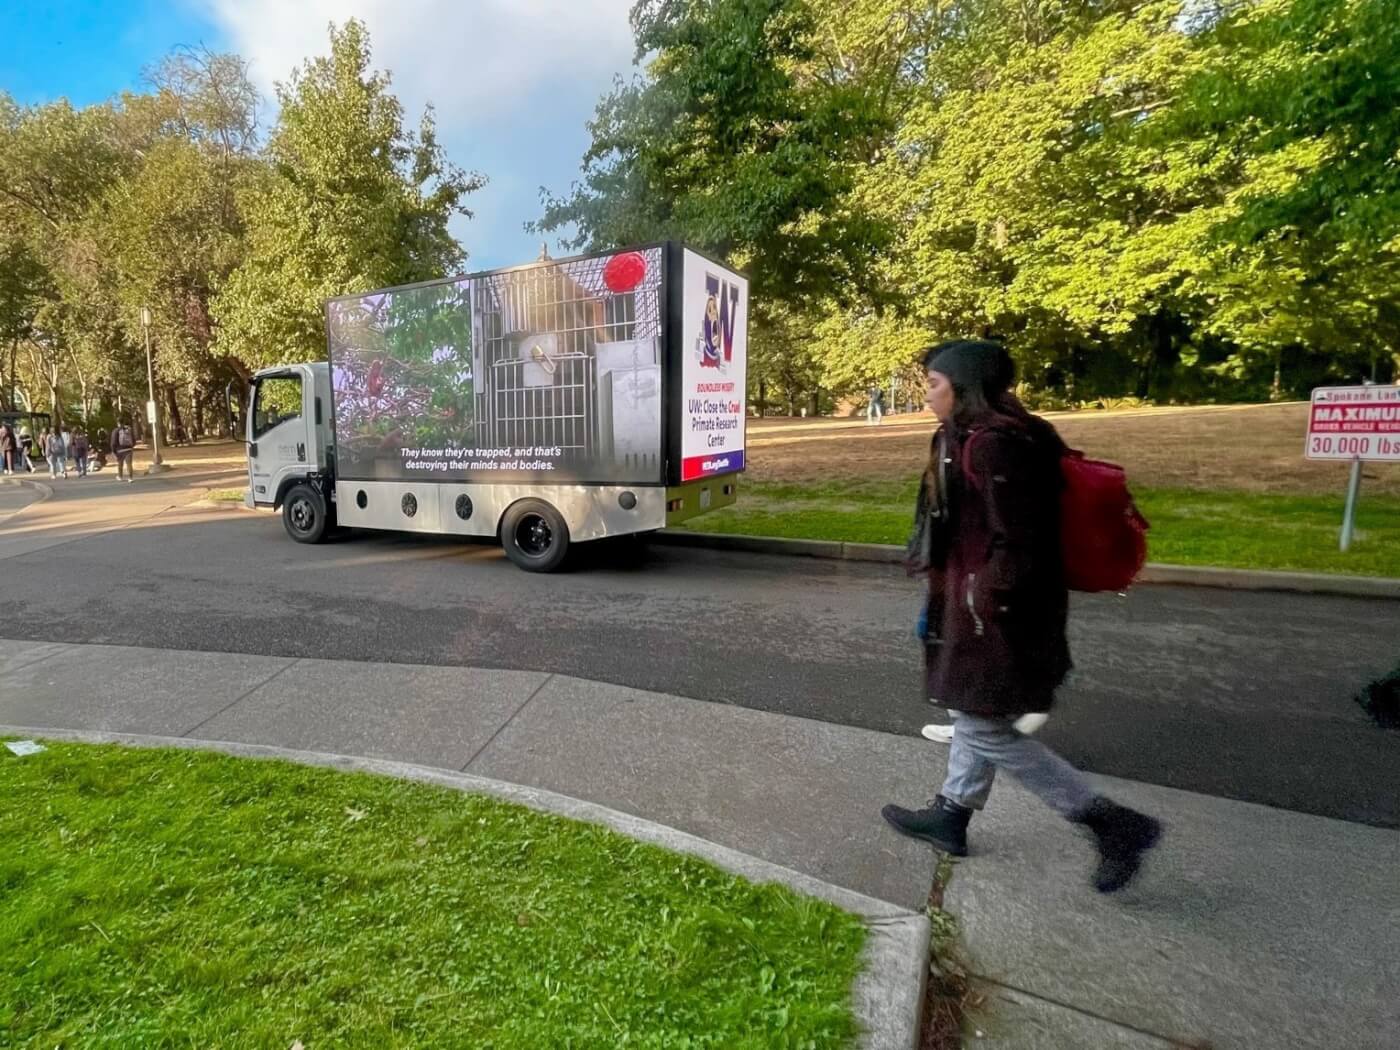 PETA's shrieking monkey mobile billboard drives through the UW campus